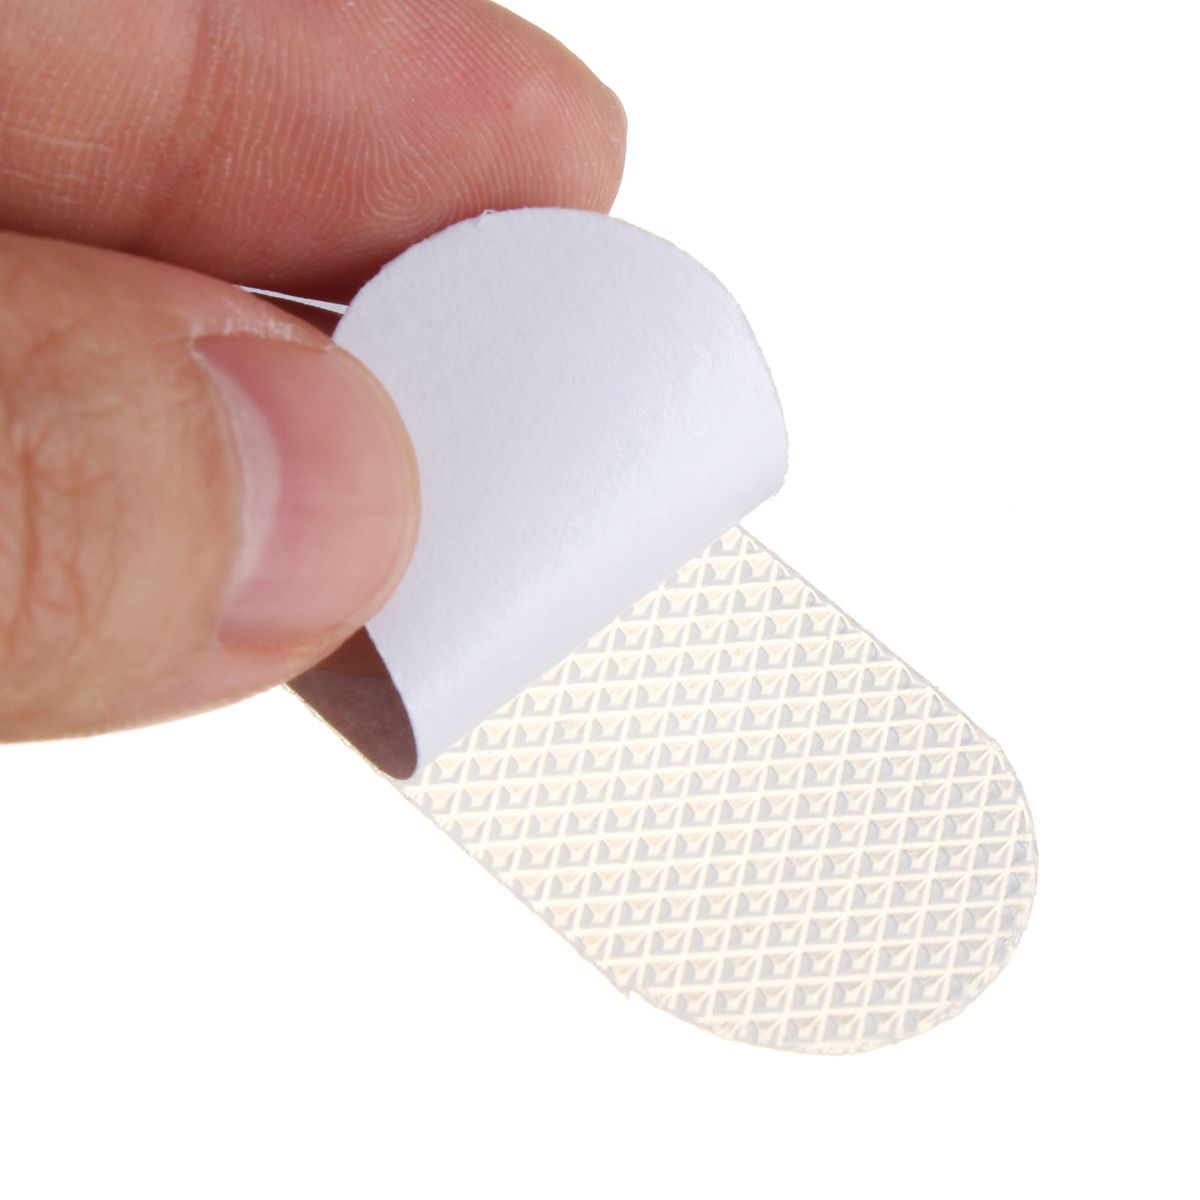 5Pcs-Transparent-Anti-Slip-Bath-Tread-Sticker-Adhesive-Strip-Pad-Shower-Flooring-Safey-Tape-1366353